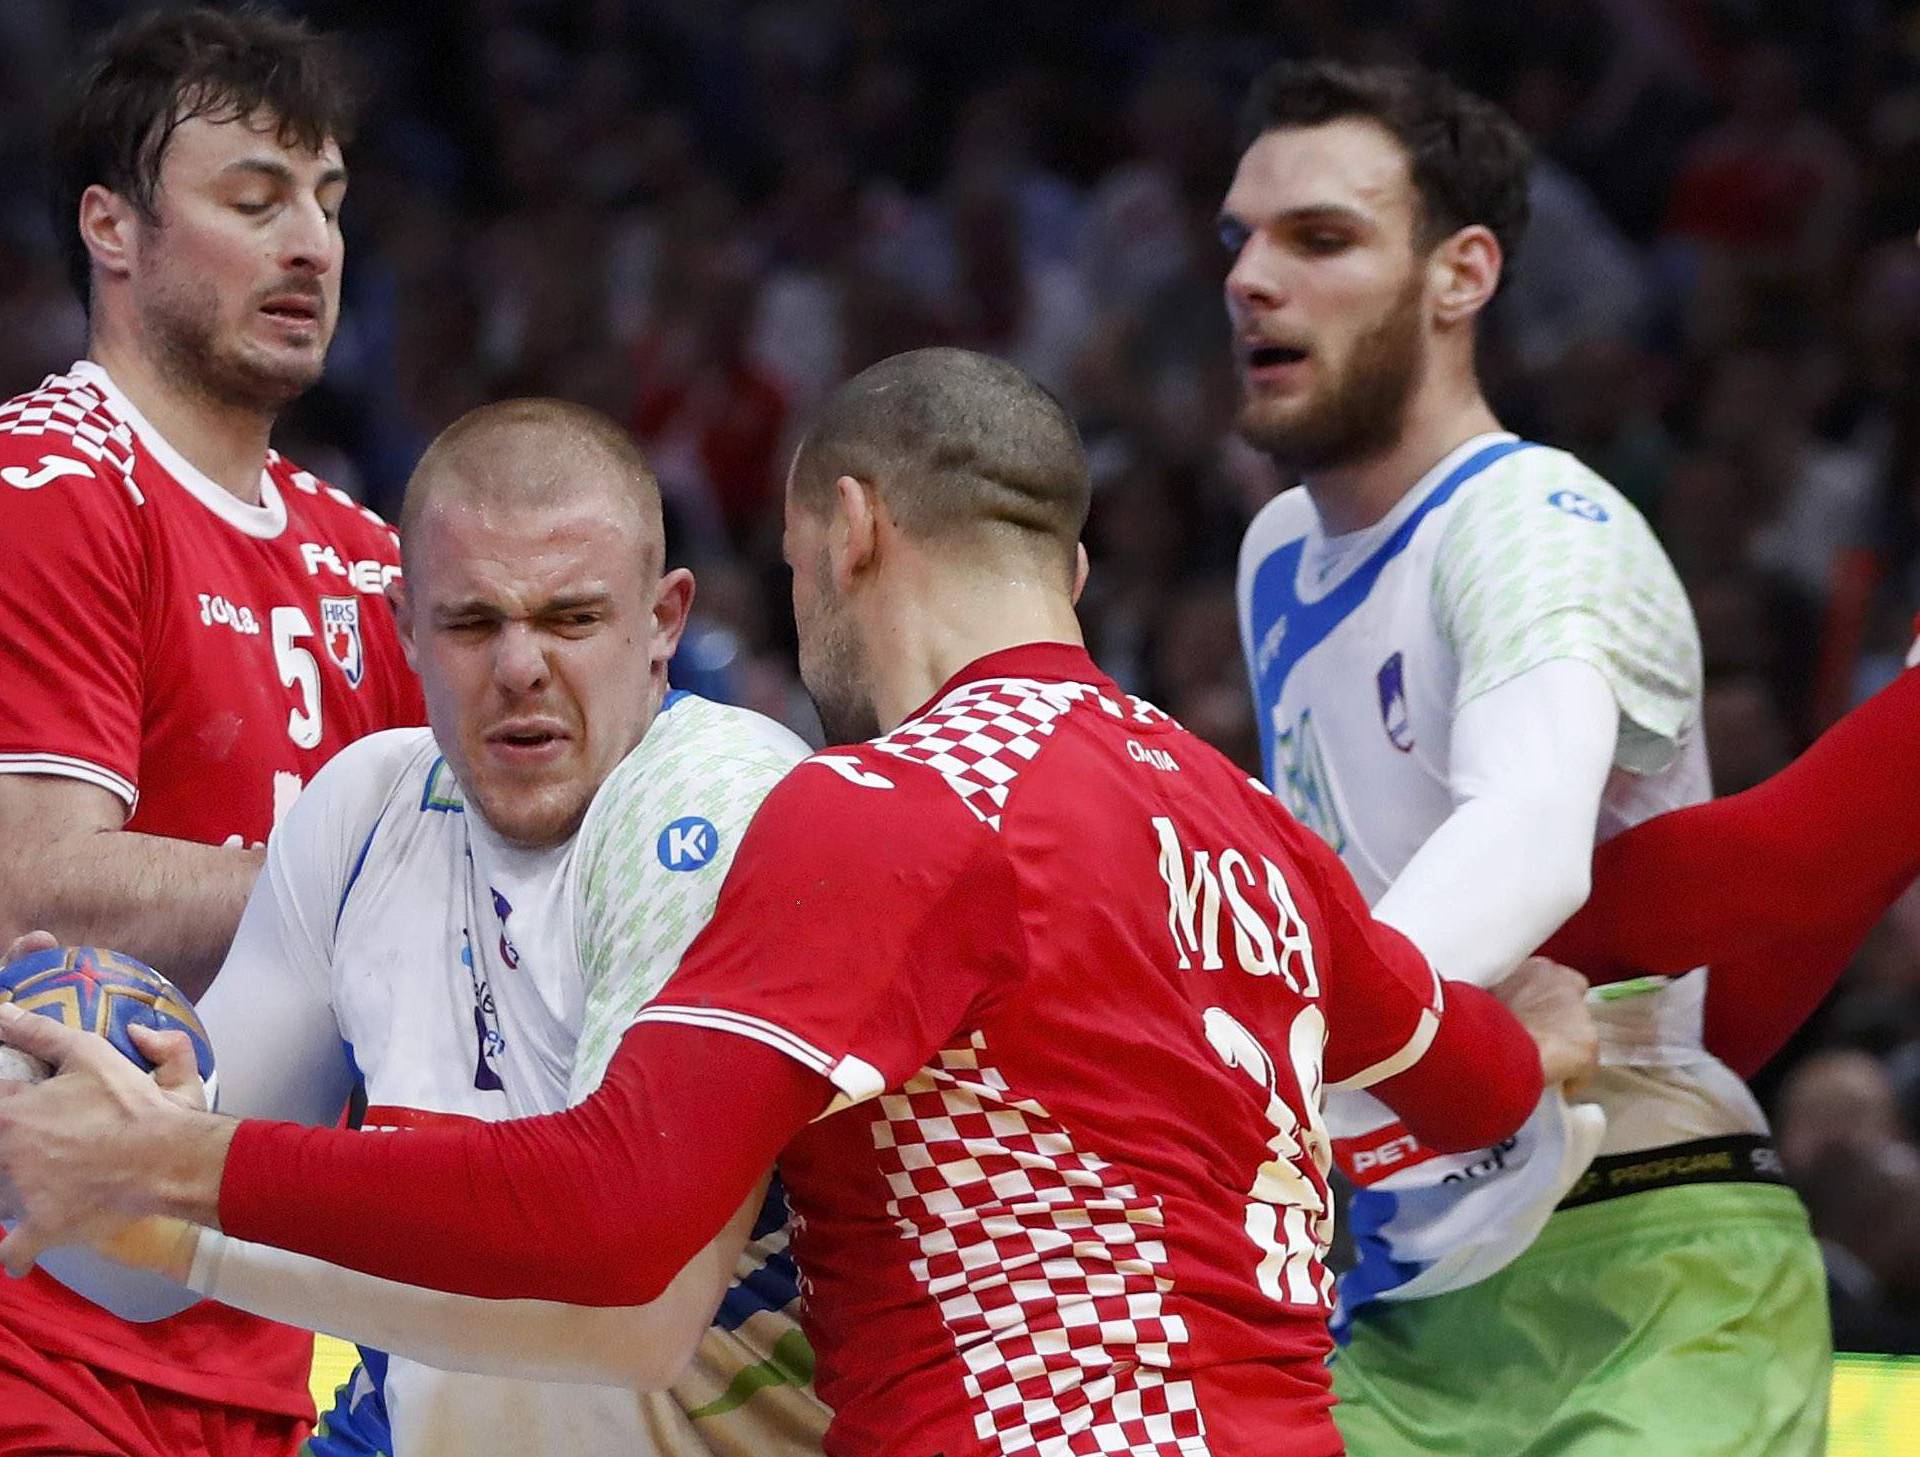 Men's Handball - Slovenia v Croatia - 2017 Men's World Championship, Bronze Medal